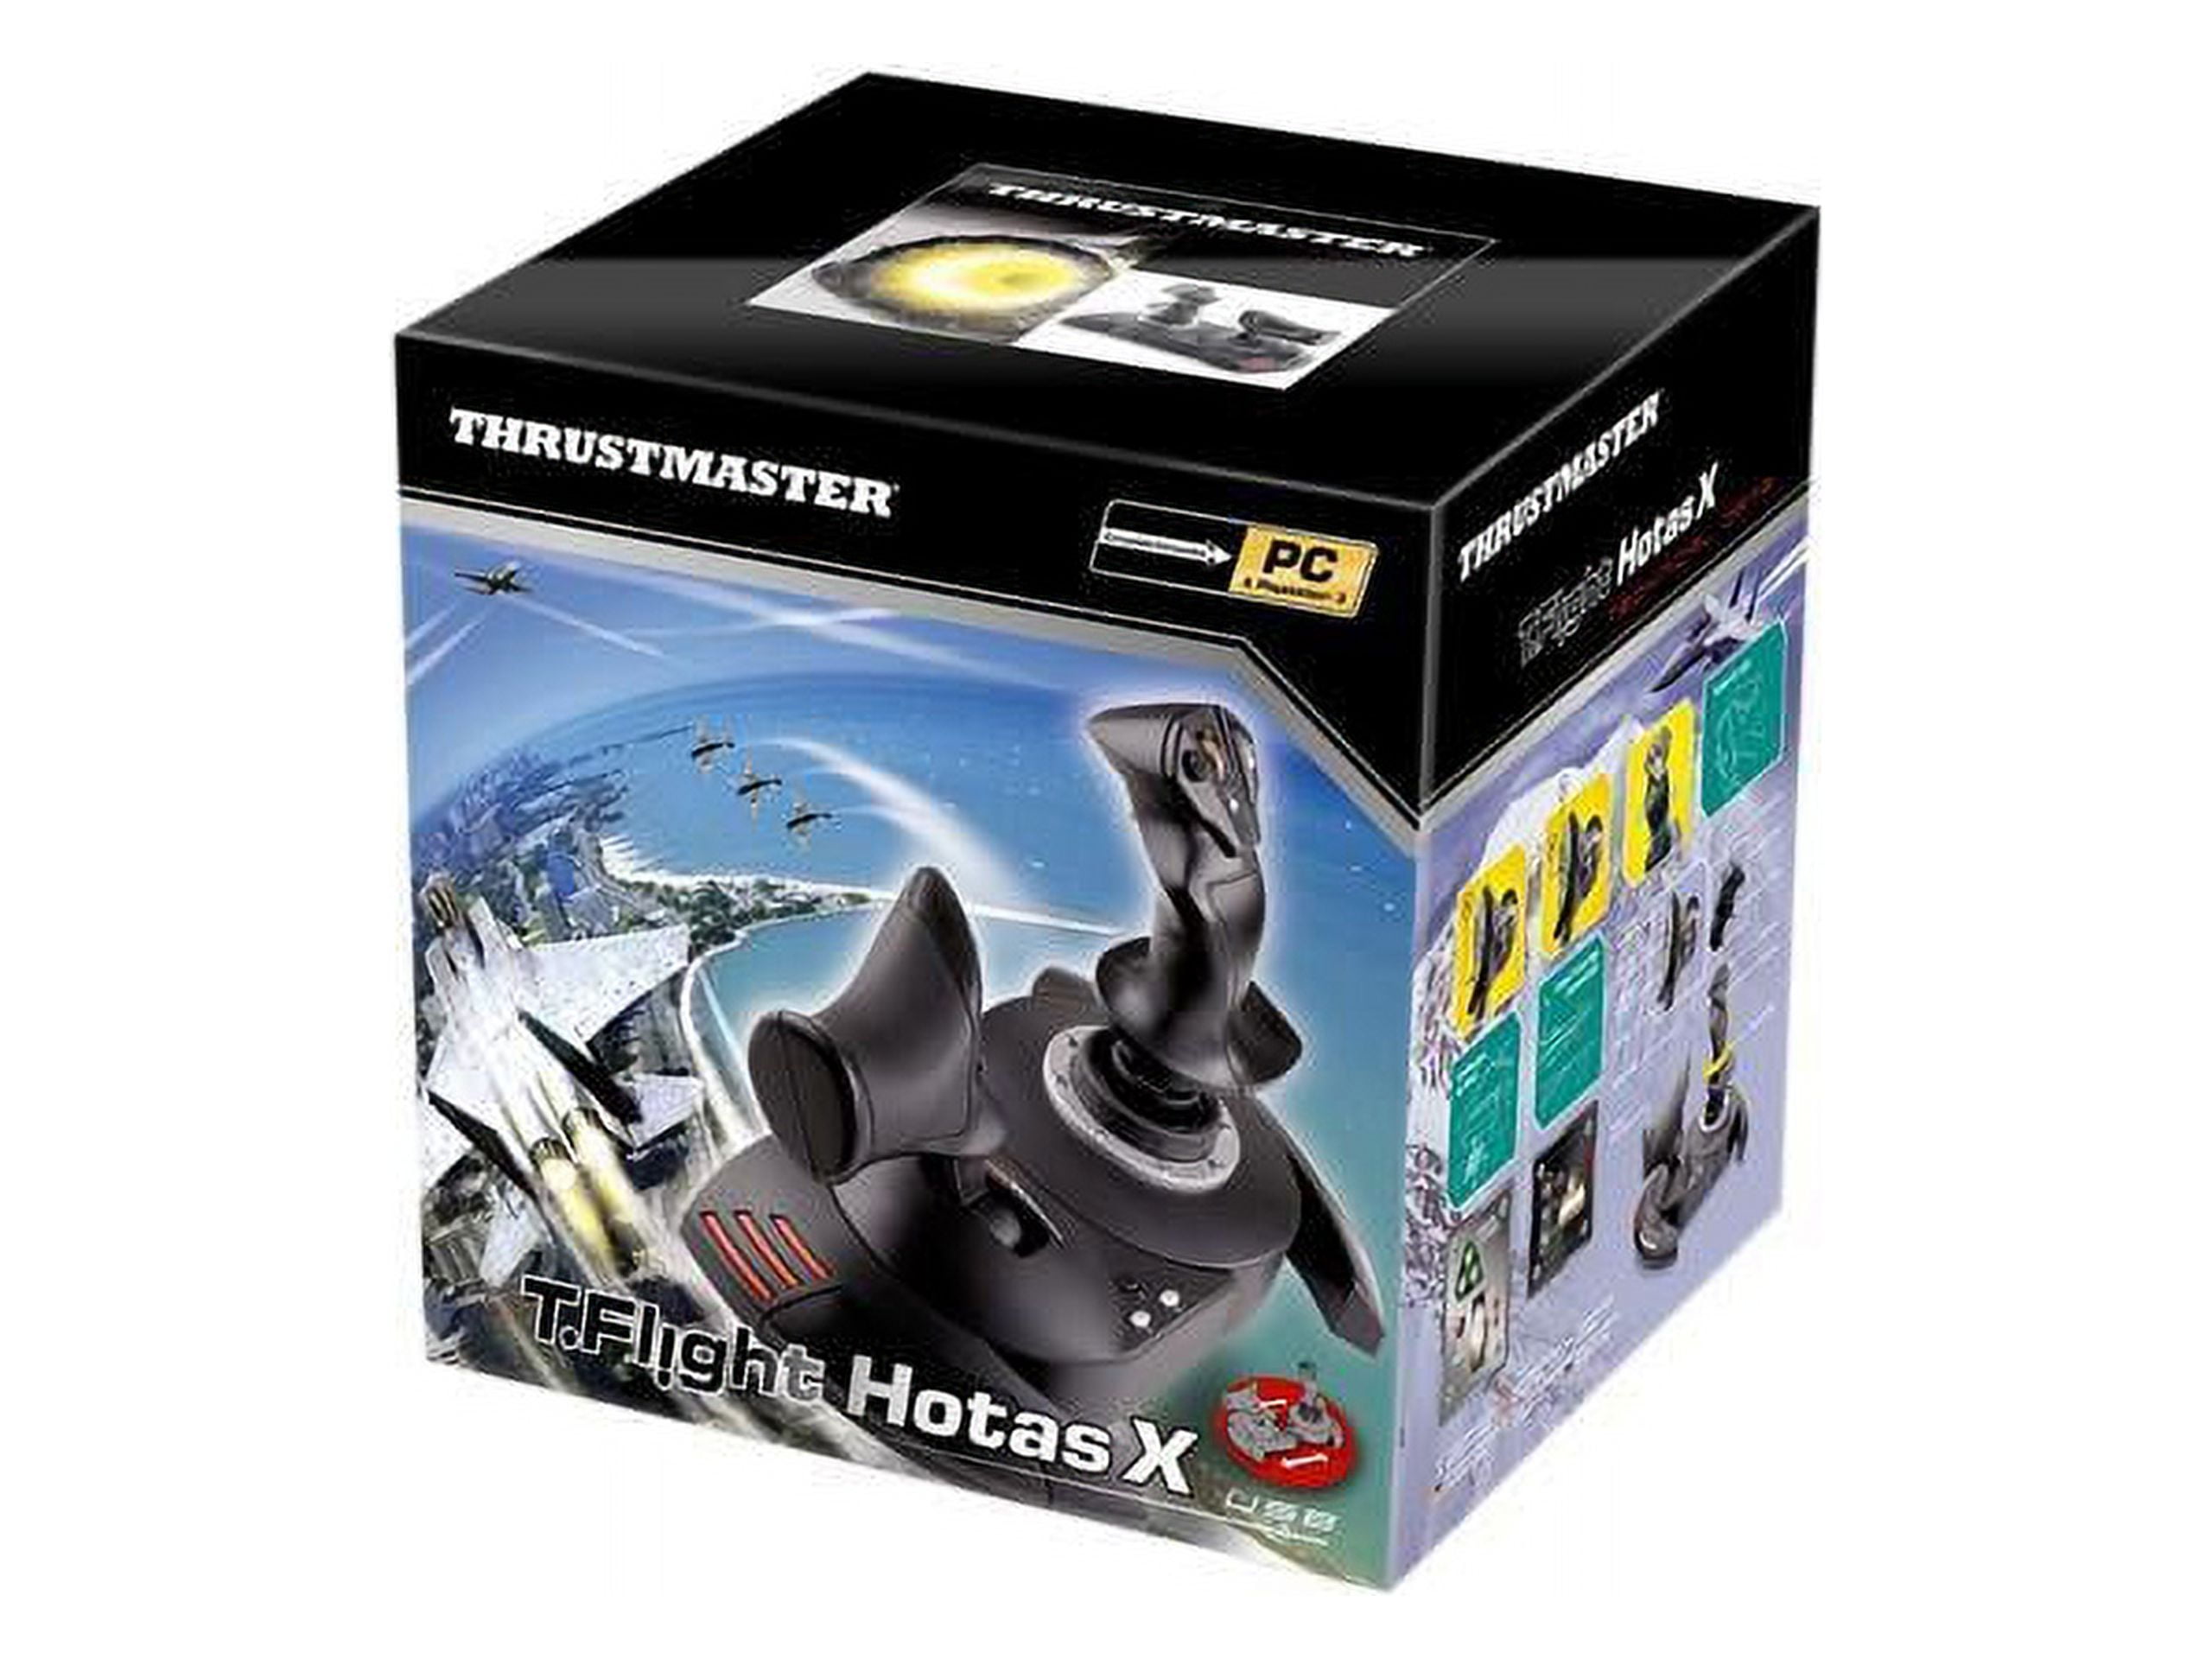 Thrustmaster T-Flight Hotas X Flight Throttle Stick Control, PS3 and PC